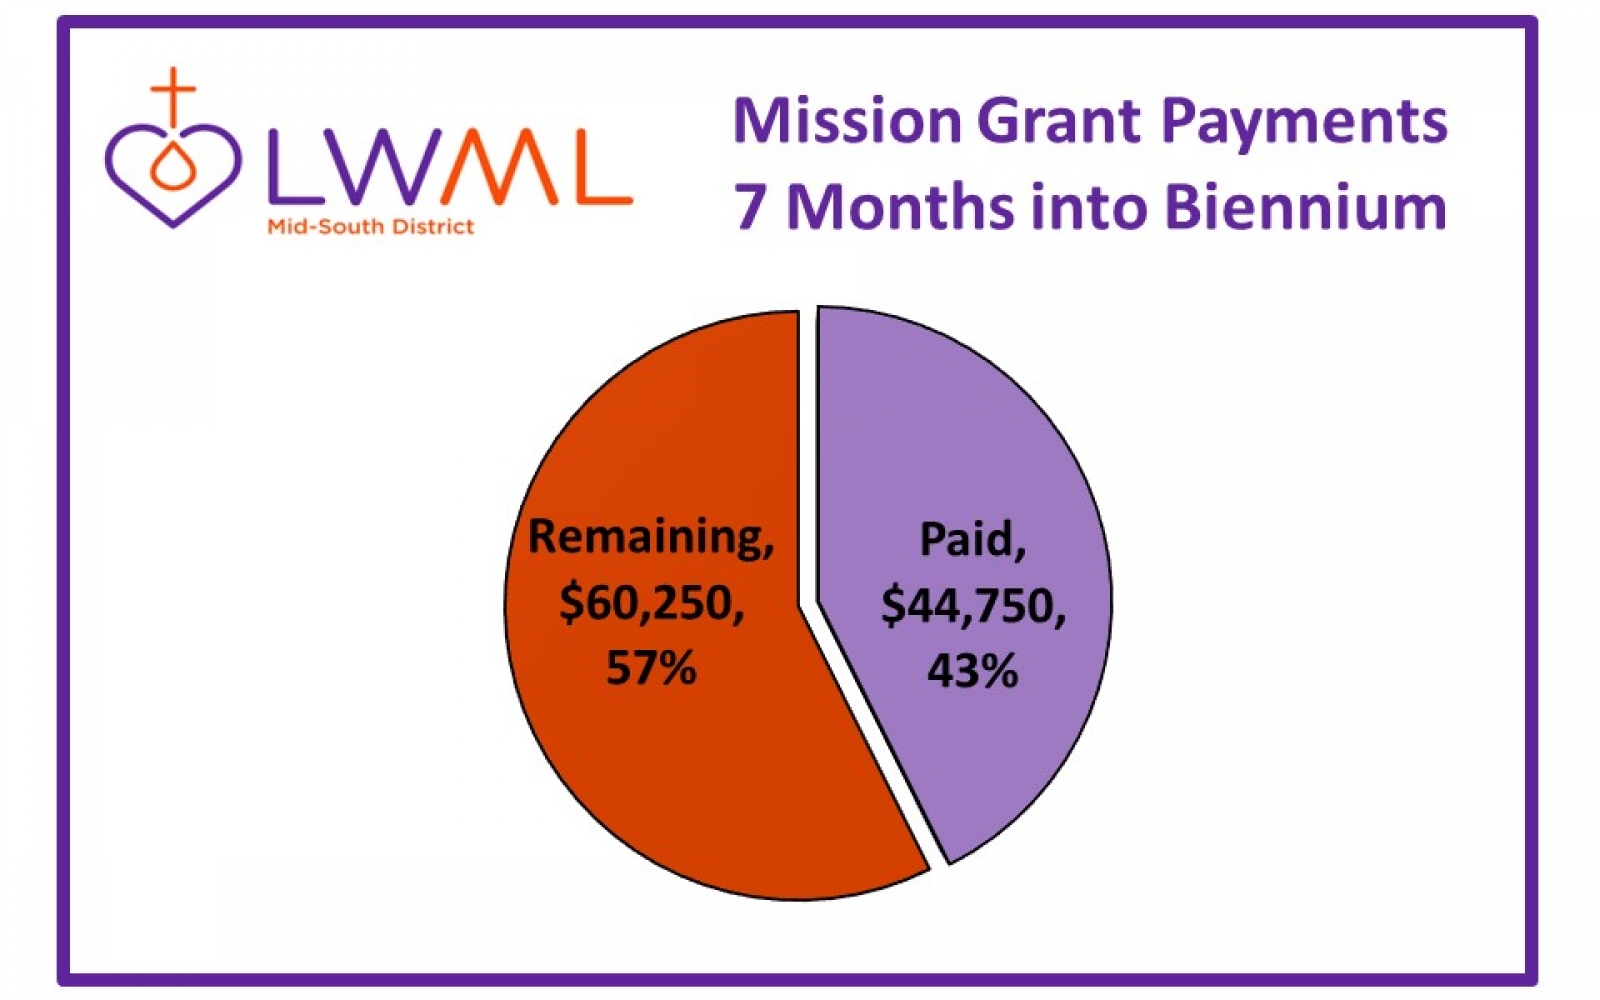 Mission Grant Payment Progress